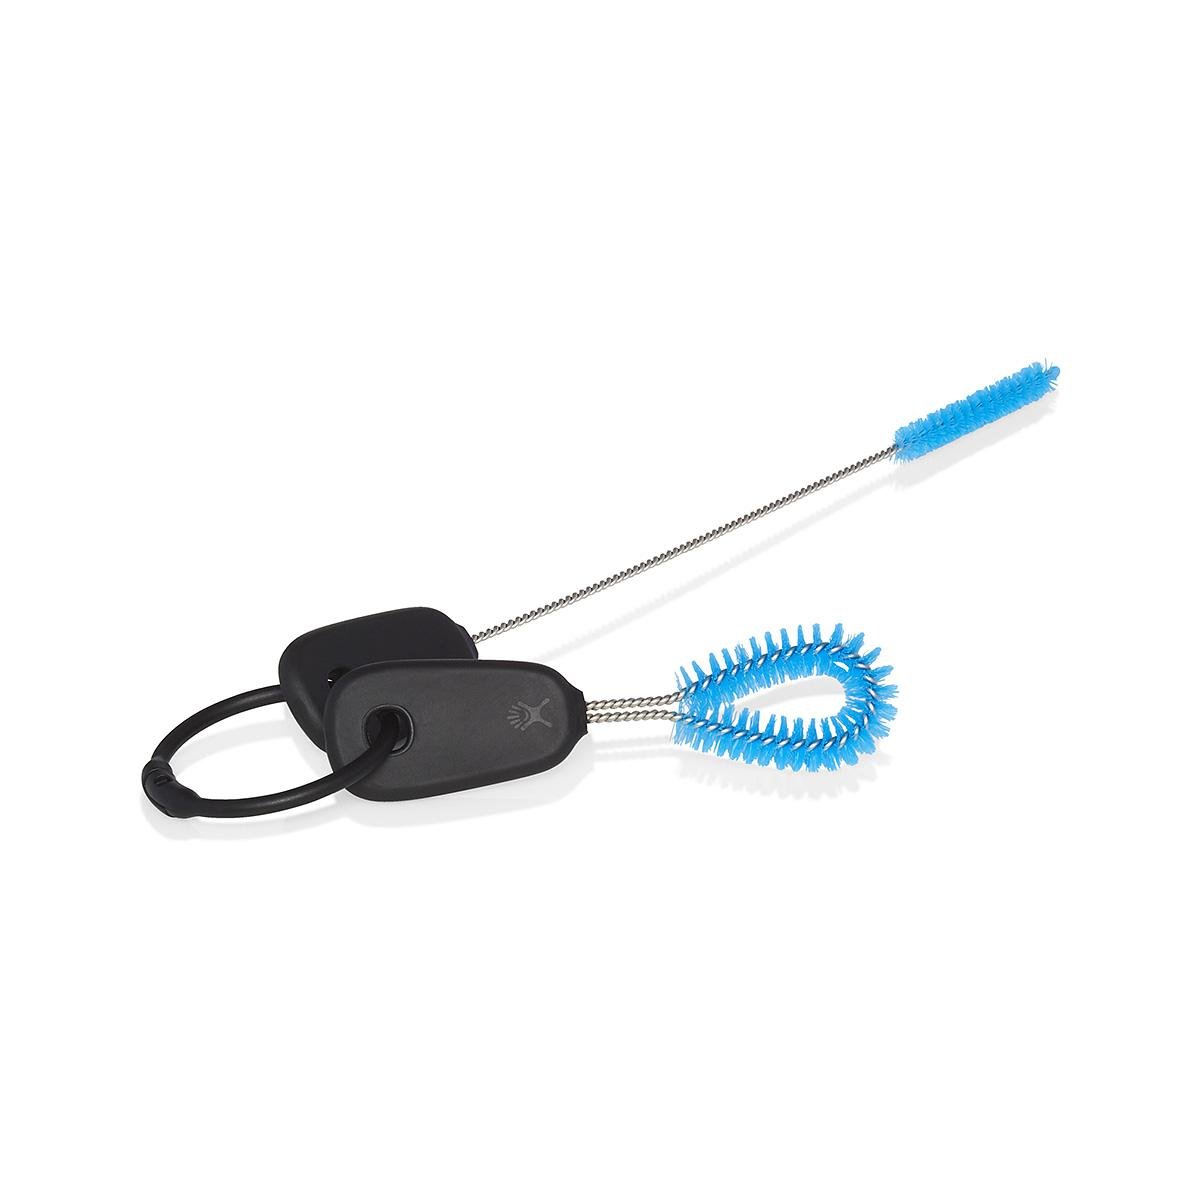 Tumbler Lid, Straw and Straw Cleaner Brush Kit